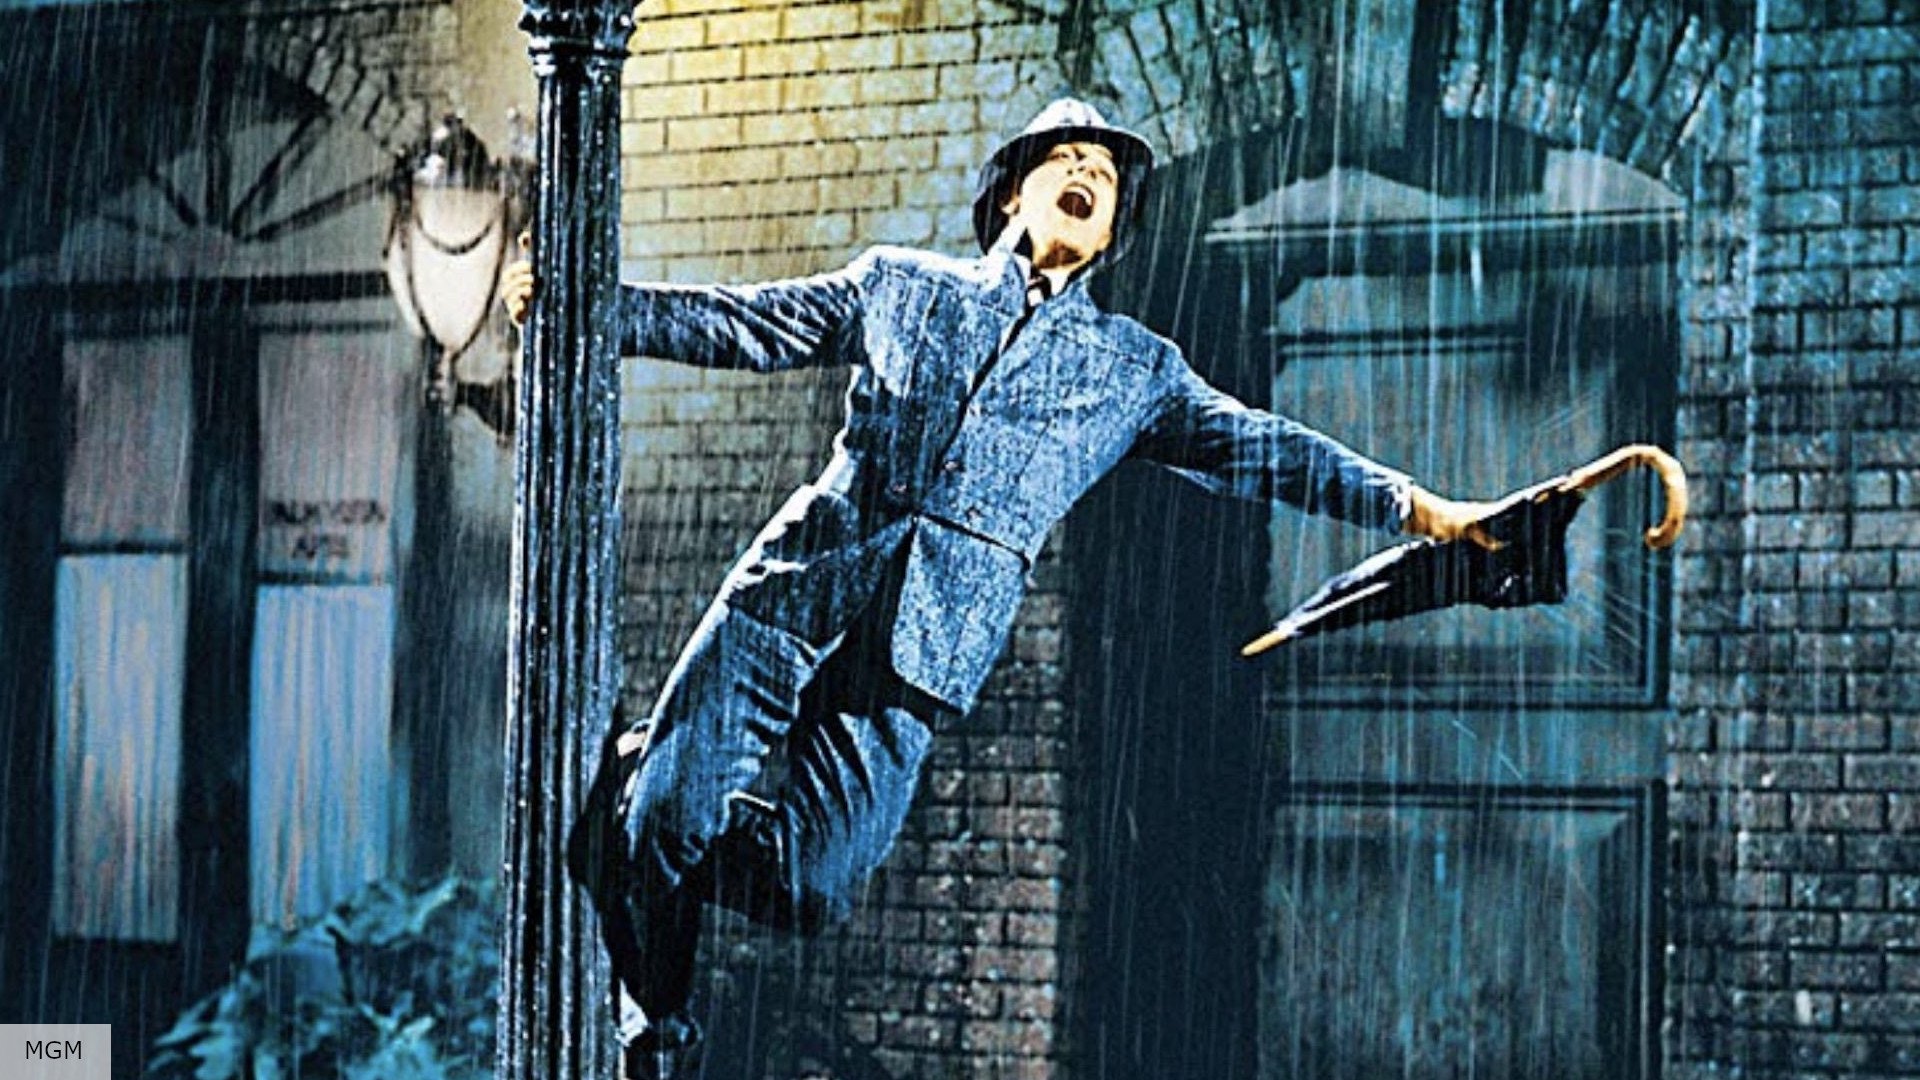 Best feel-good movies: Gene Kelly as Don Lockwood in Singin' in the Rain